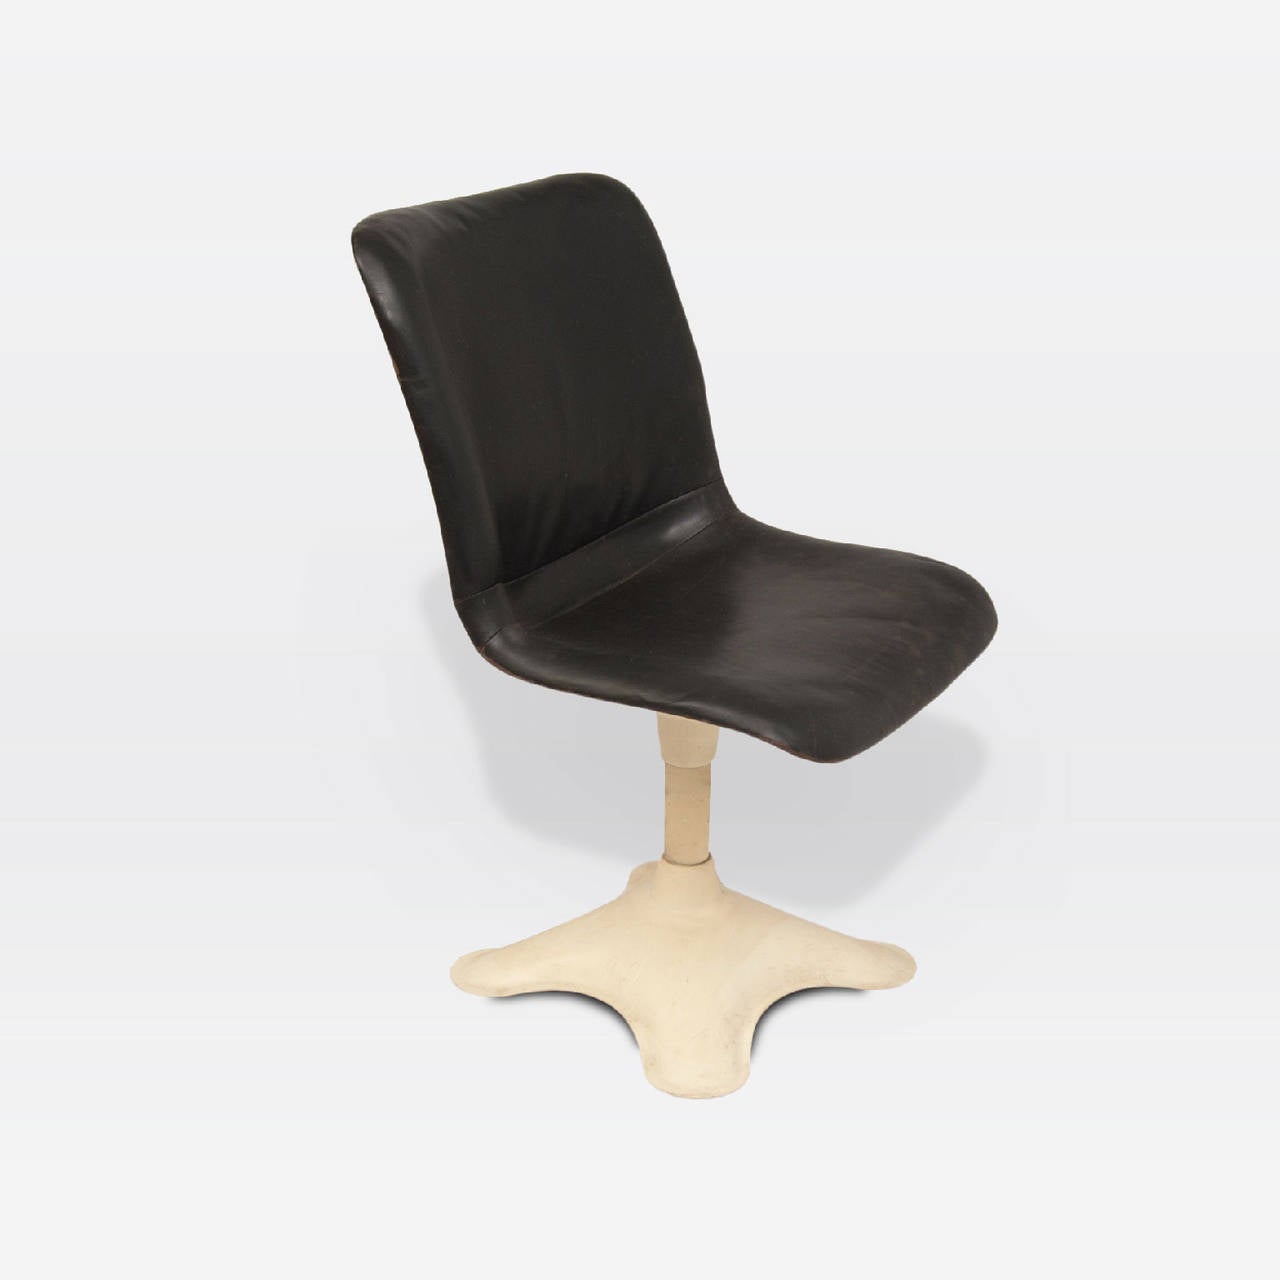 Black leather upholstered seat. White and metal swivel base. By Yrjo Kukkapuro.